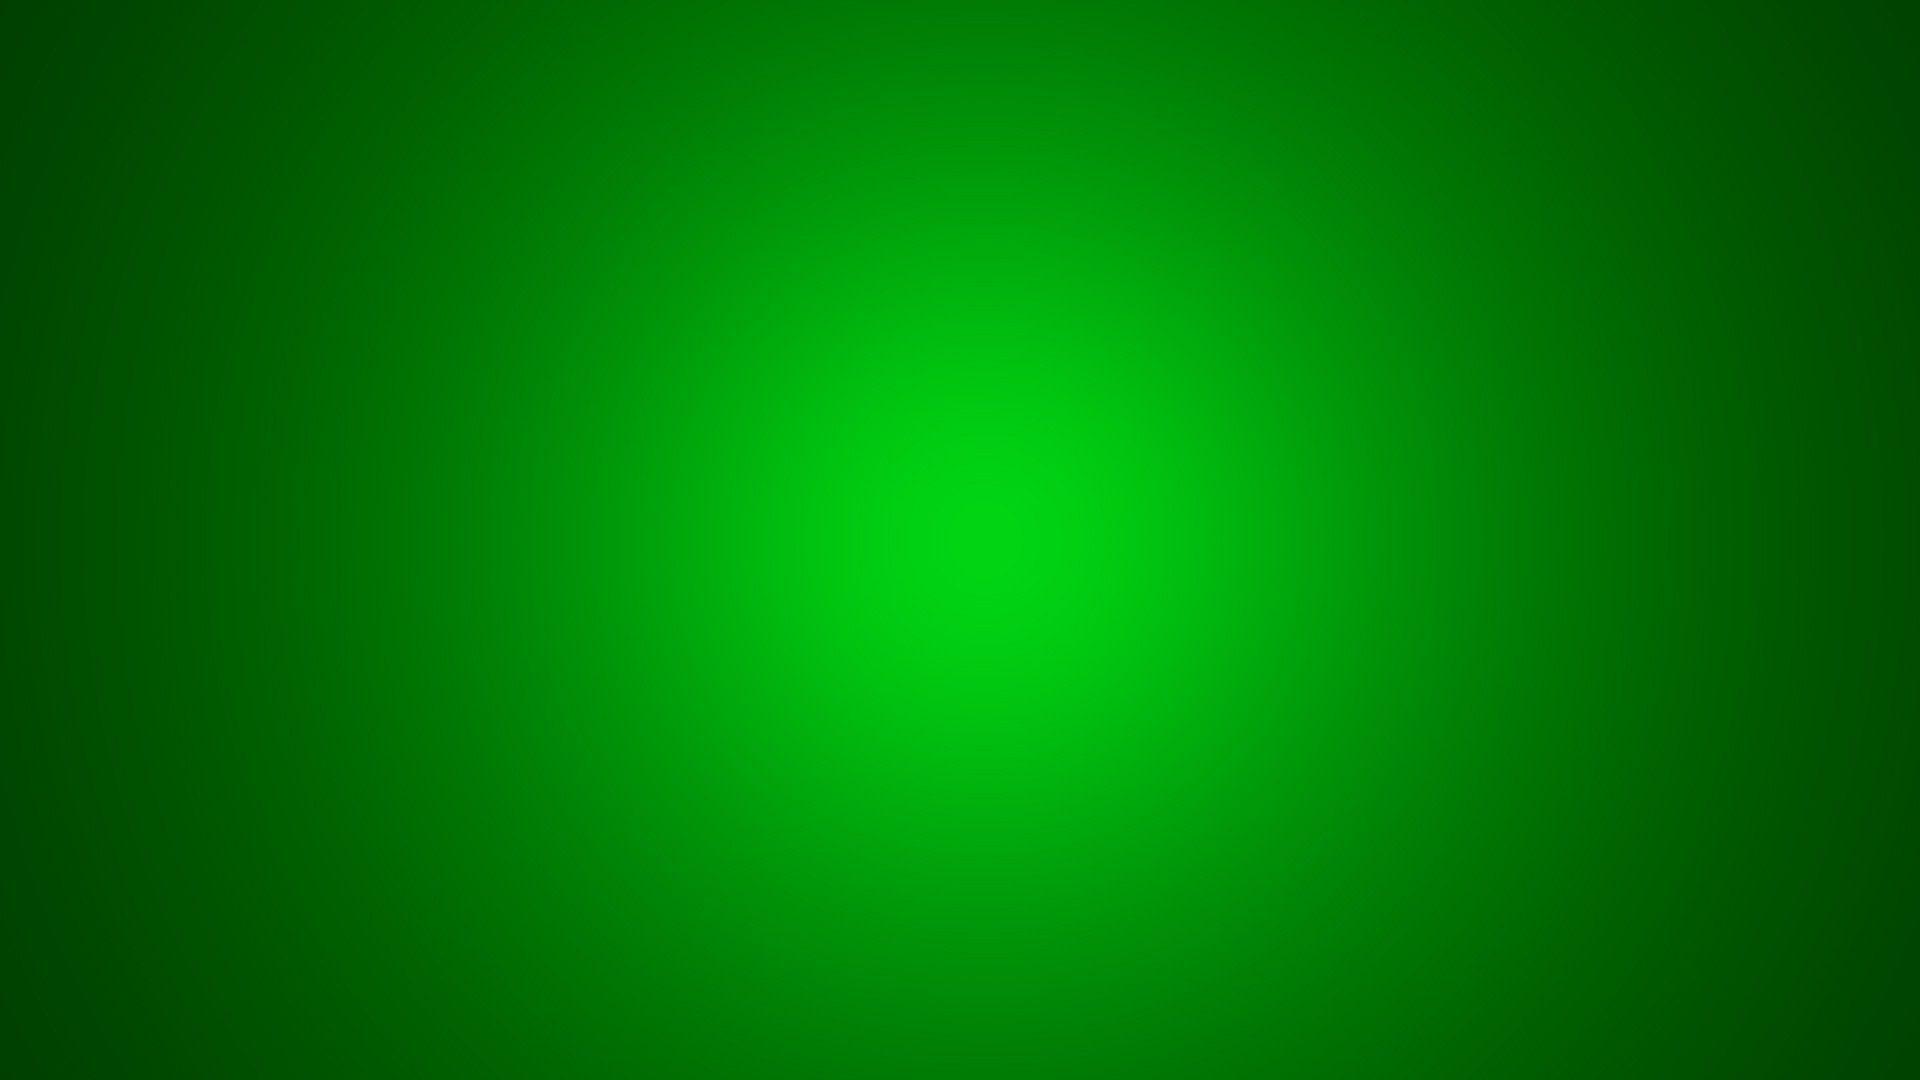 Middle shine green abstract plain wallpaper. HD Wallpaper Rocks